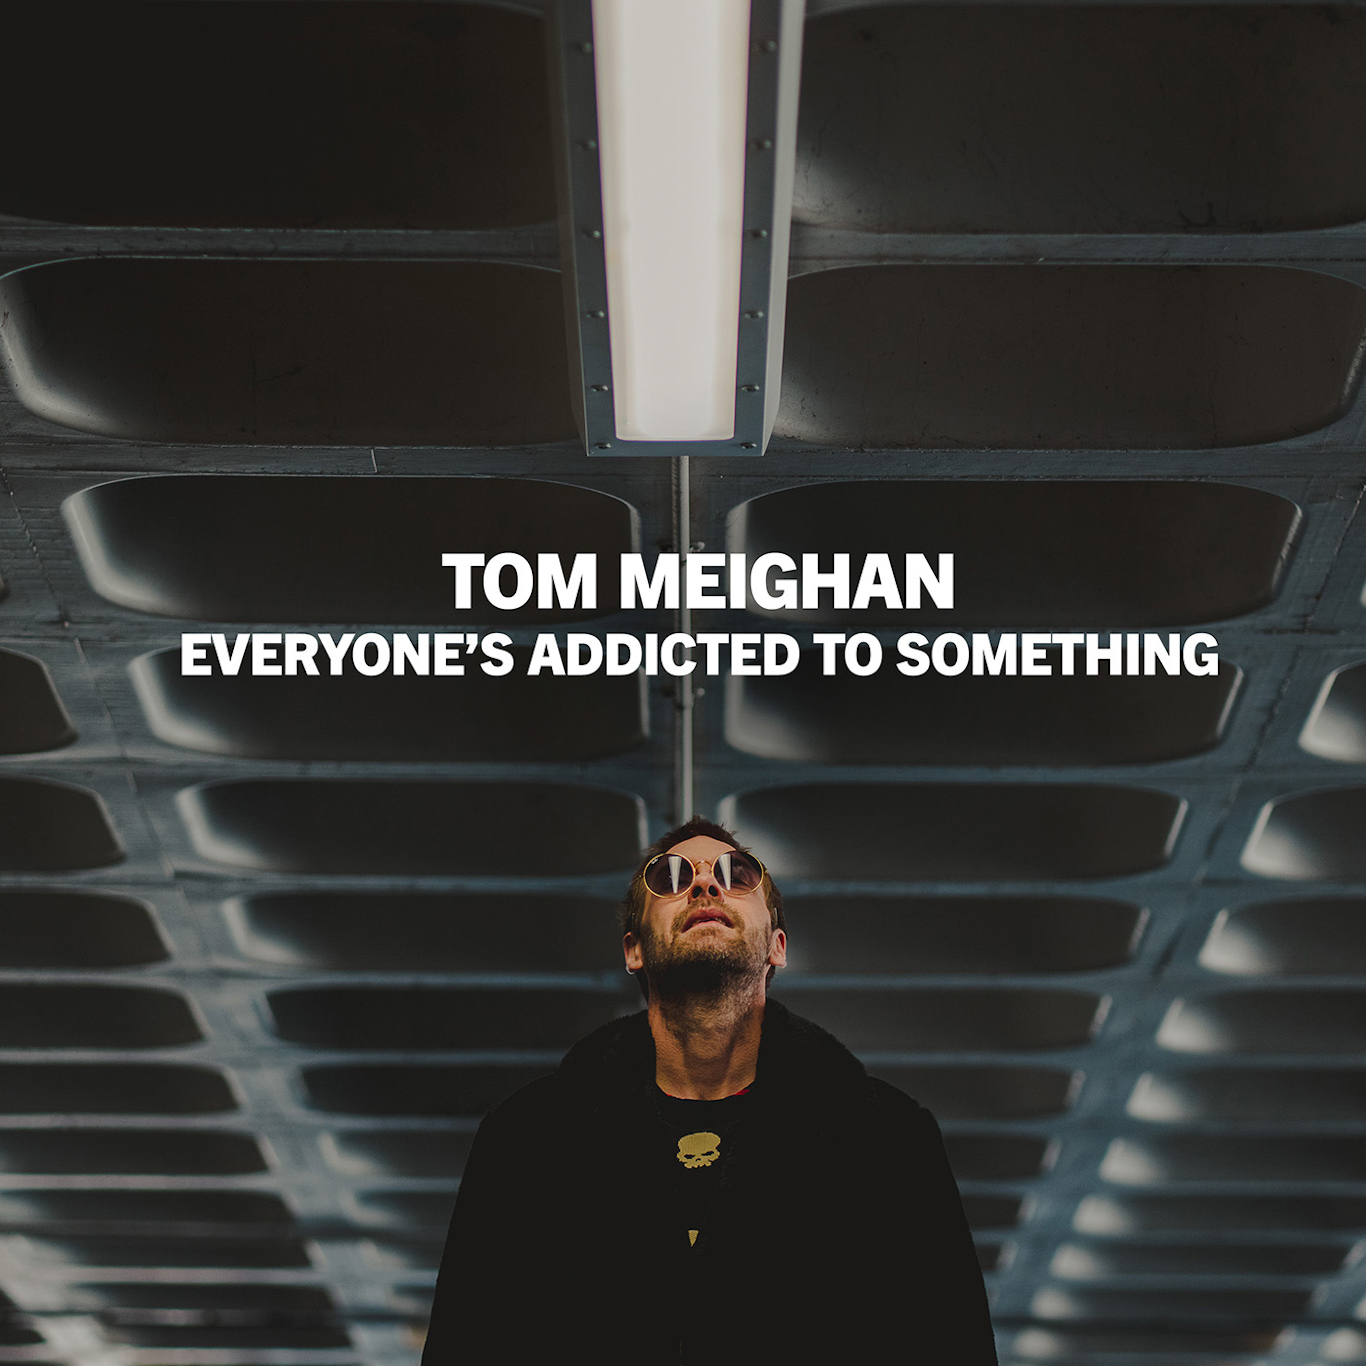 Tom Meighan